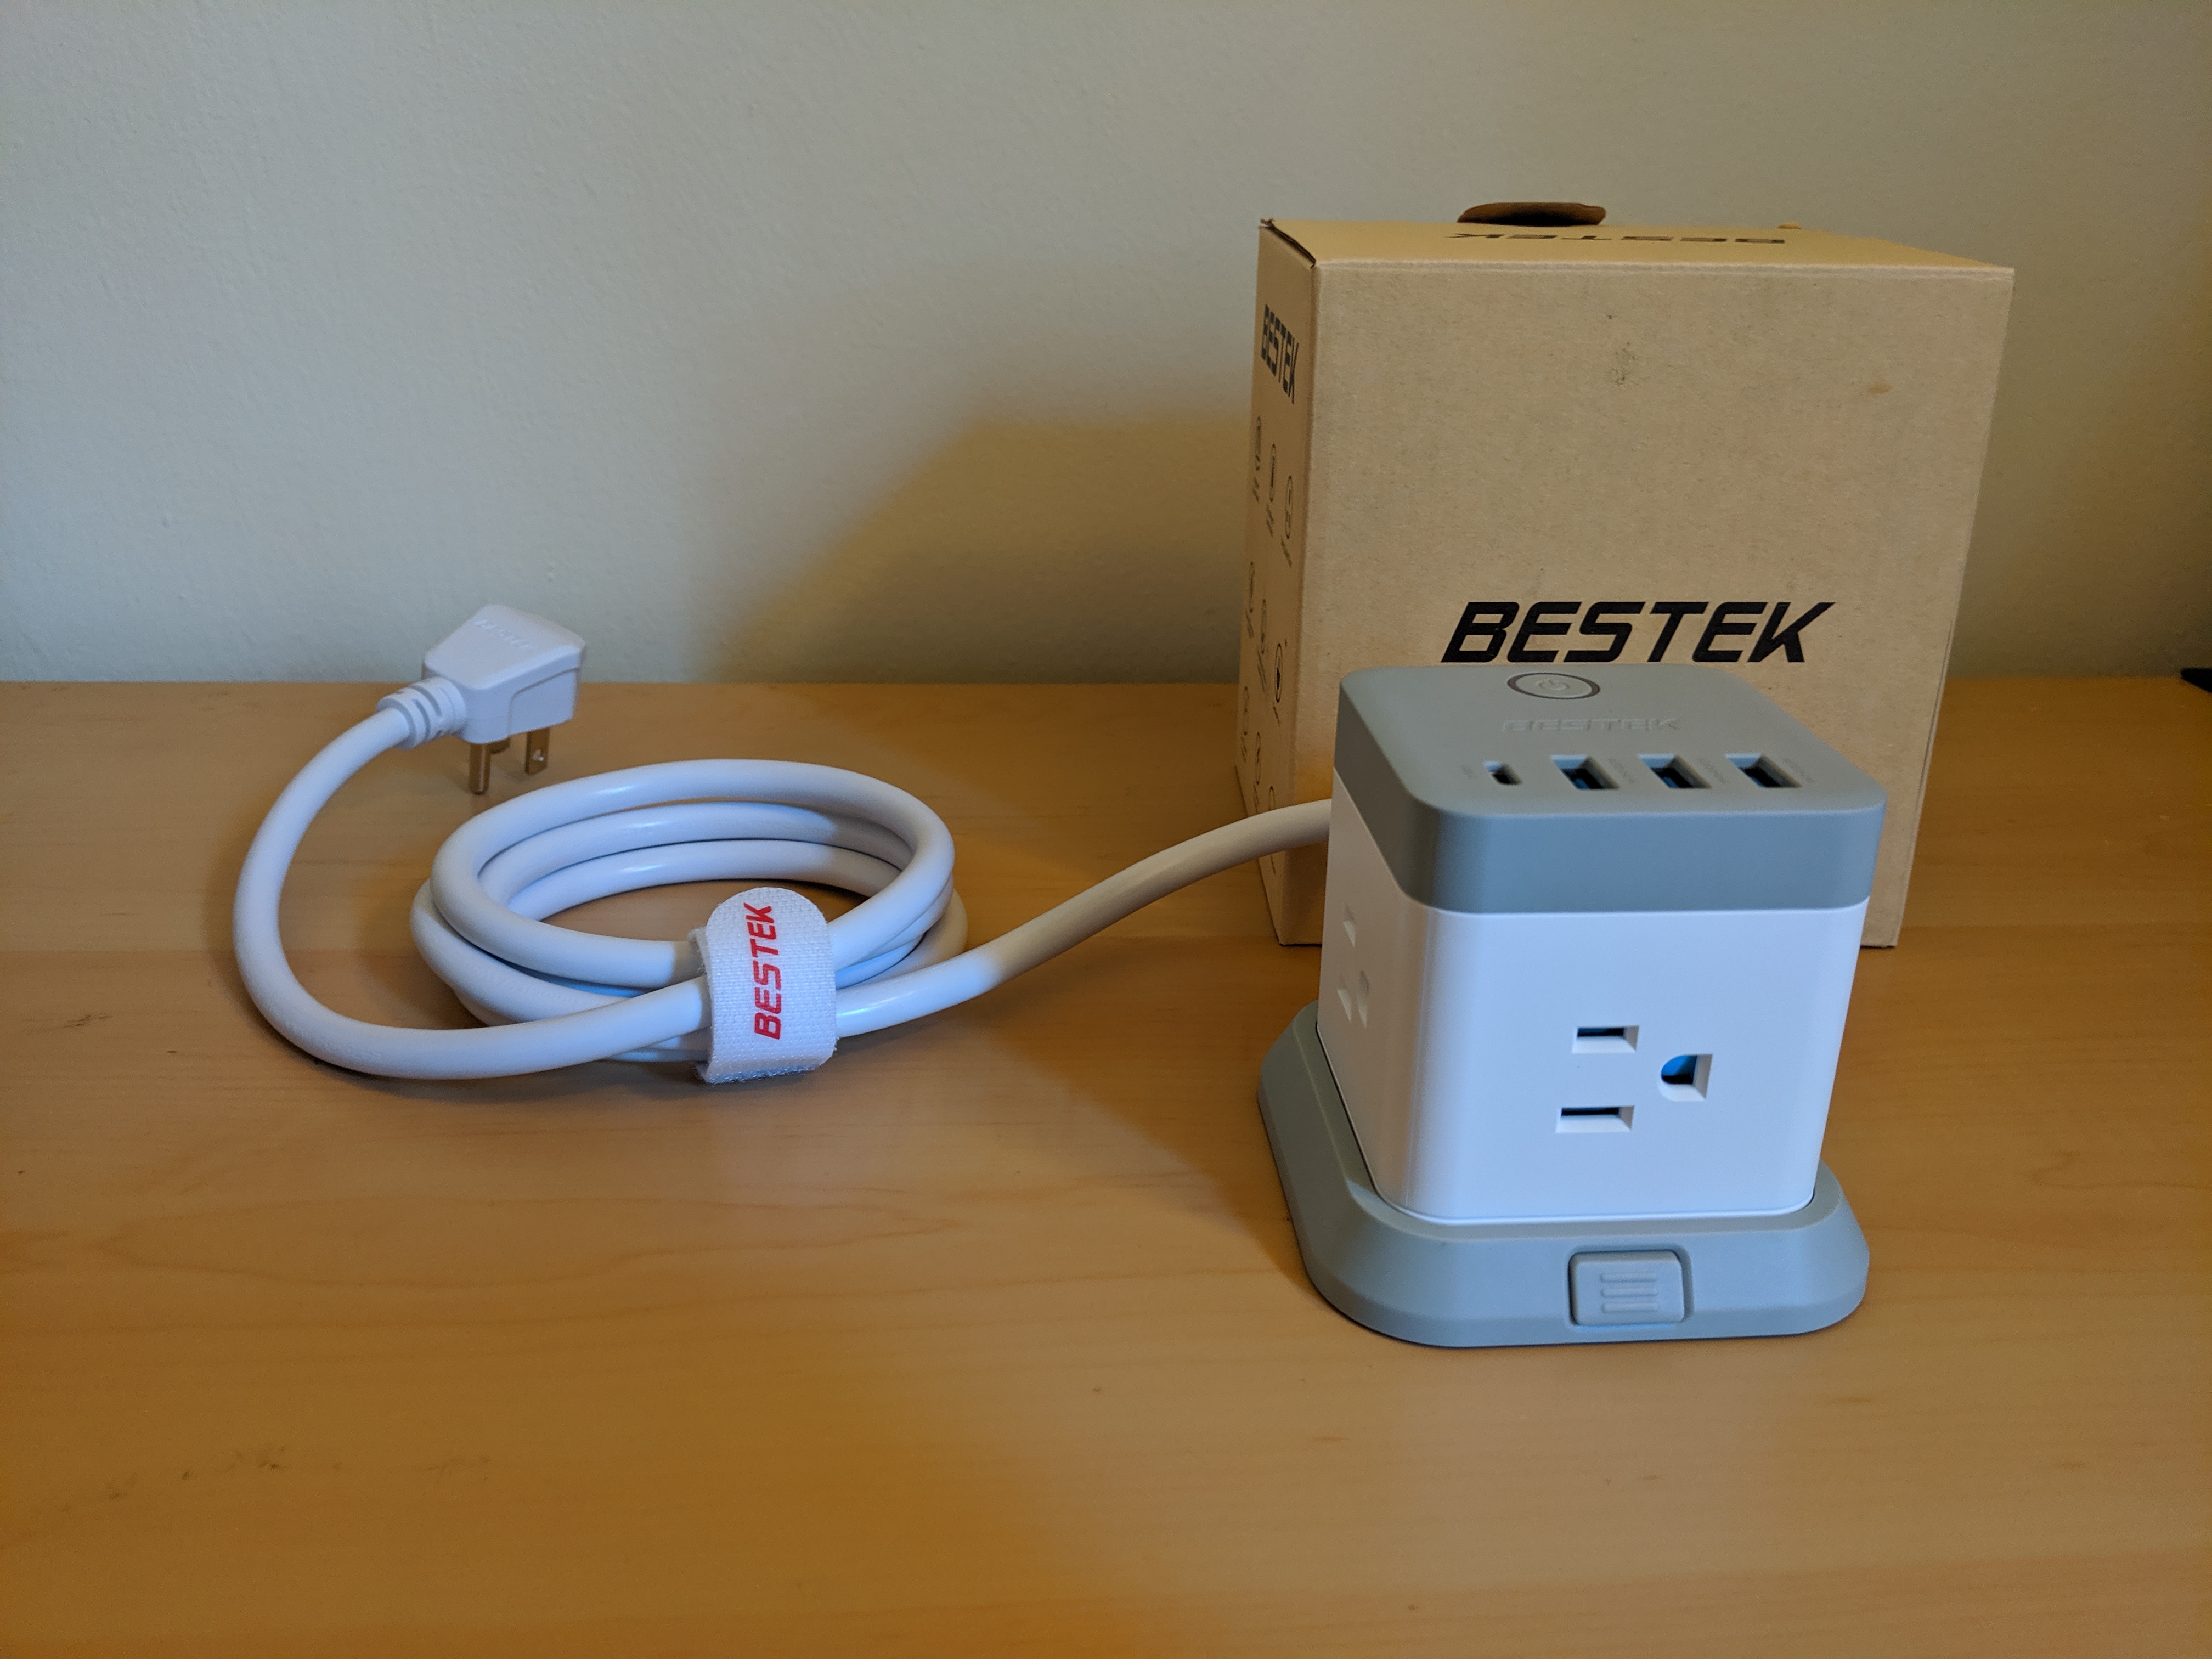 Bestek Desk Mountable Plugs and USB Charger